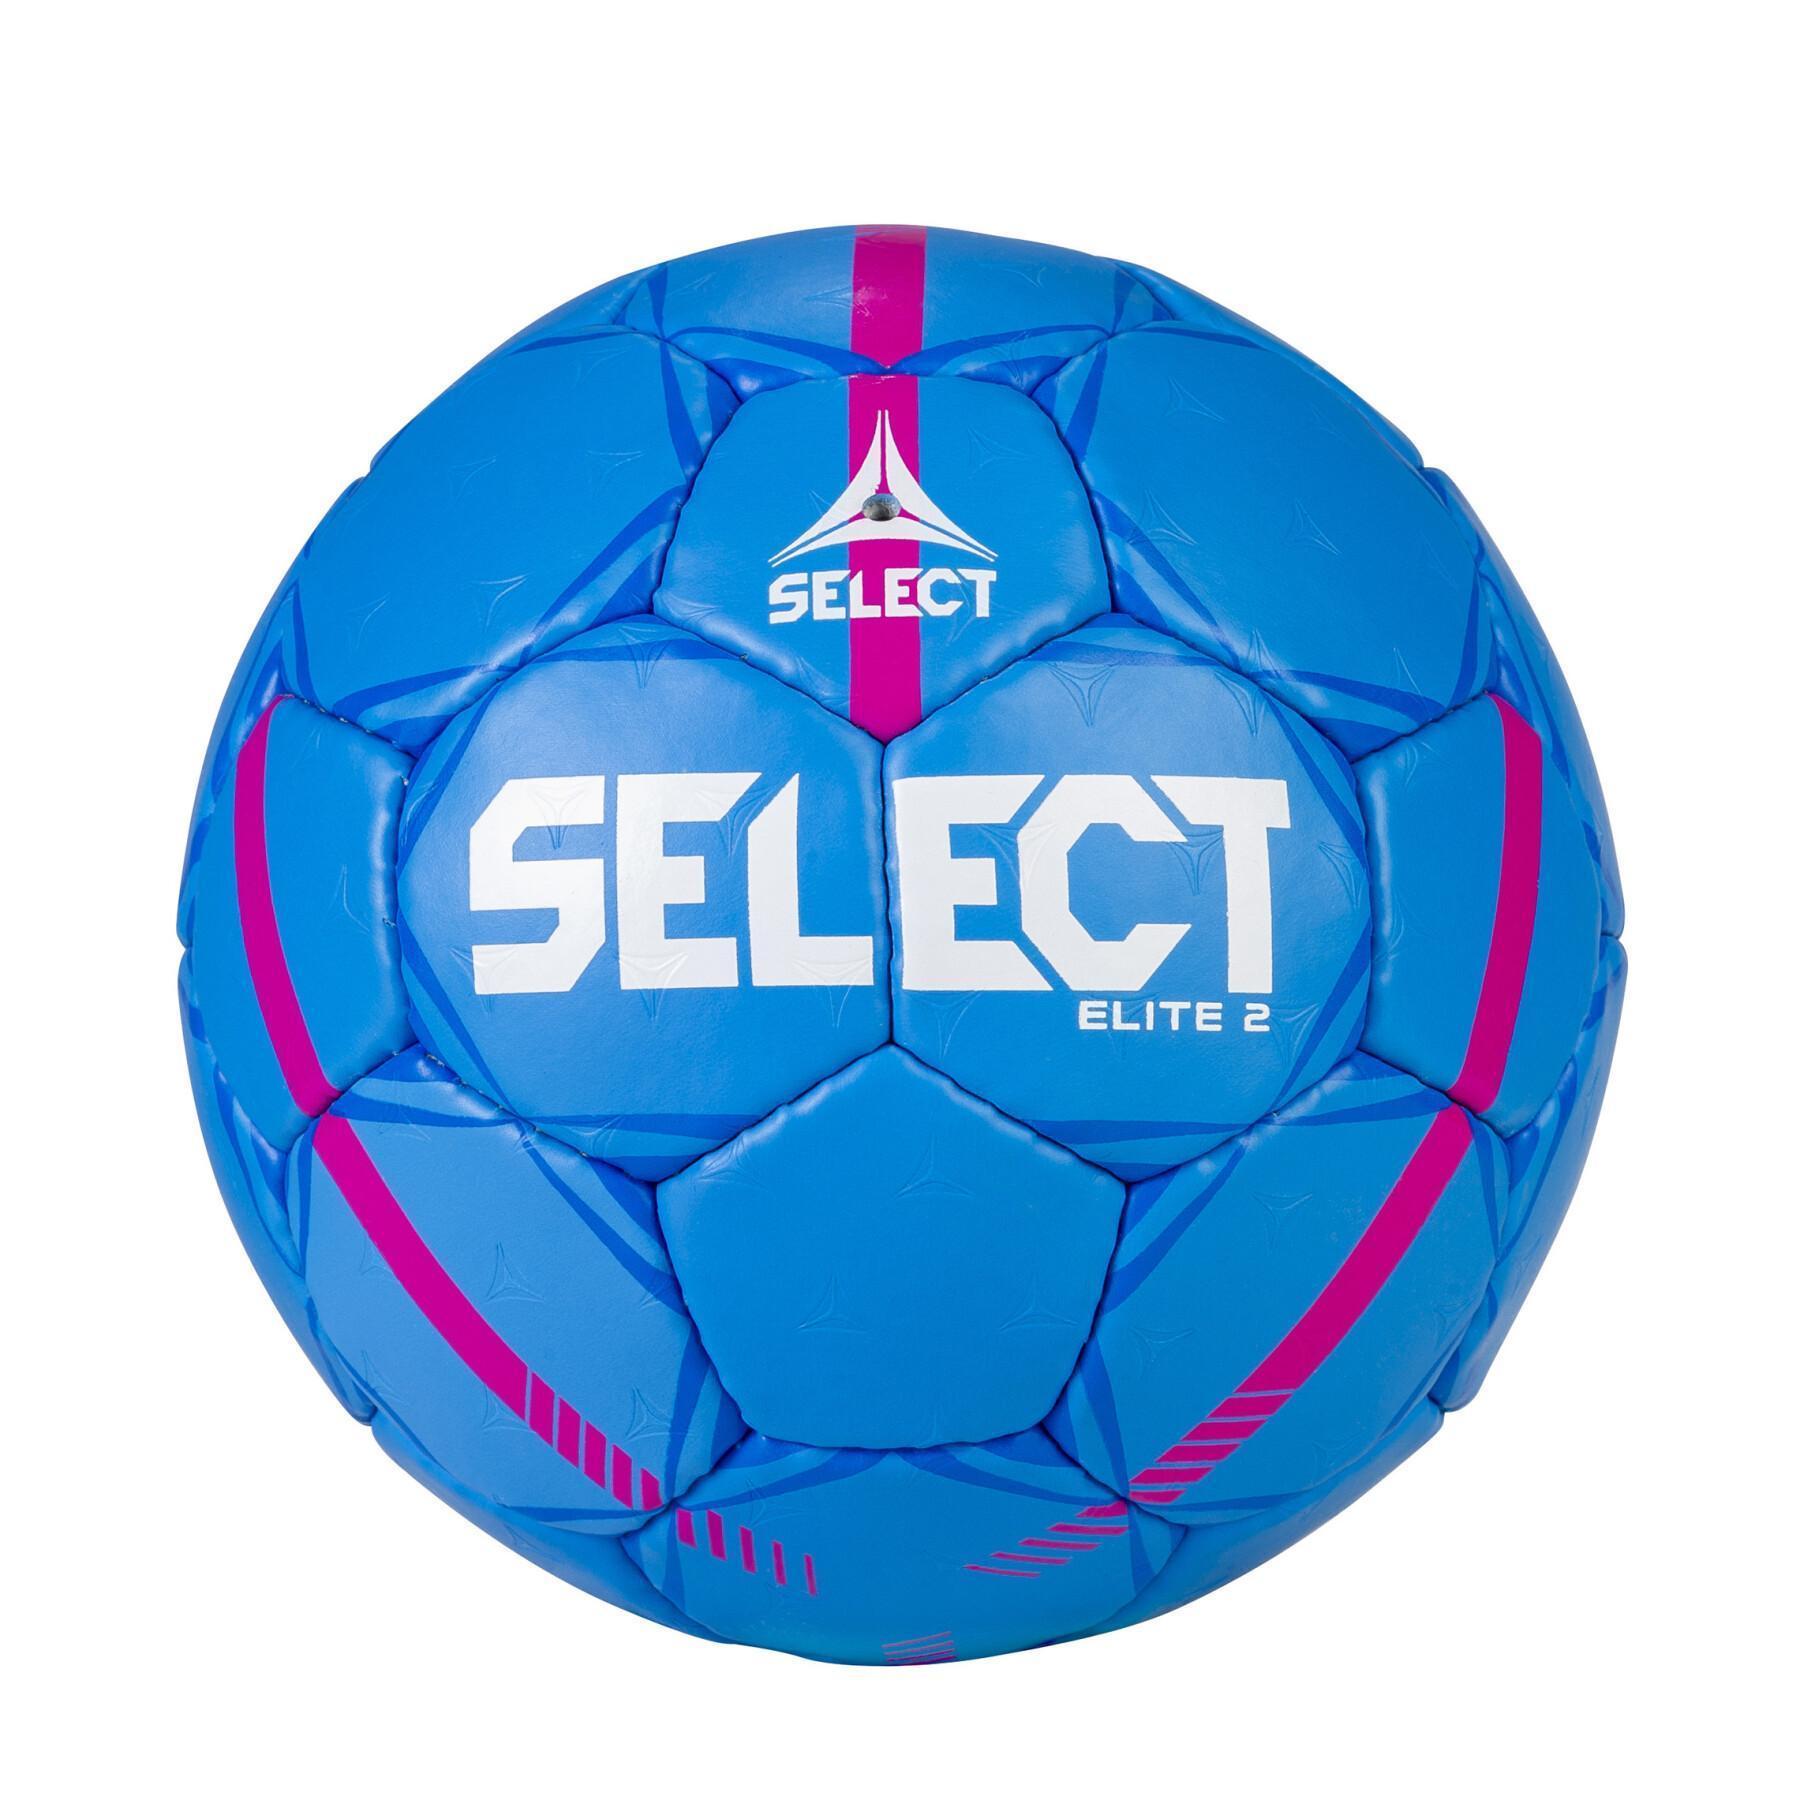 Balón Select Elite 2 Intersport